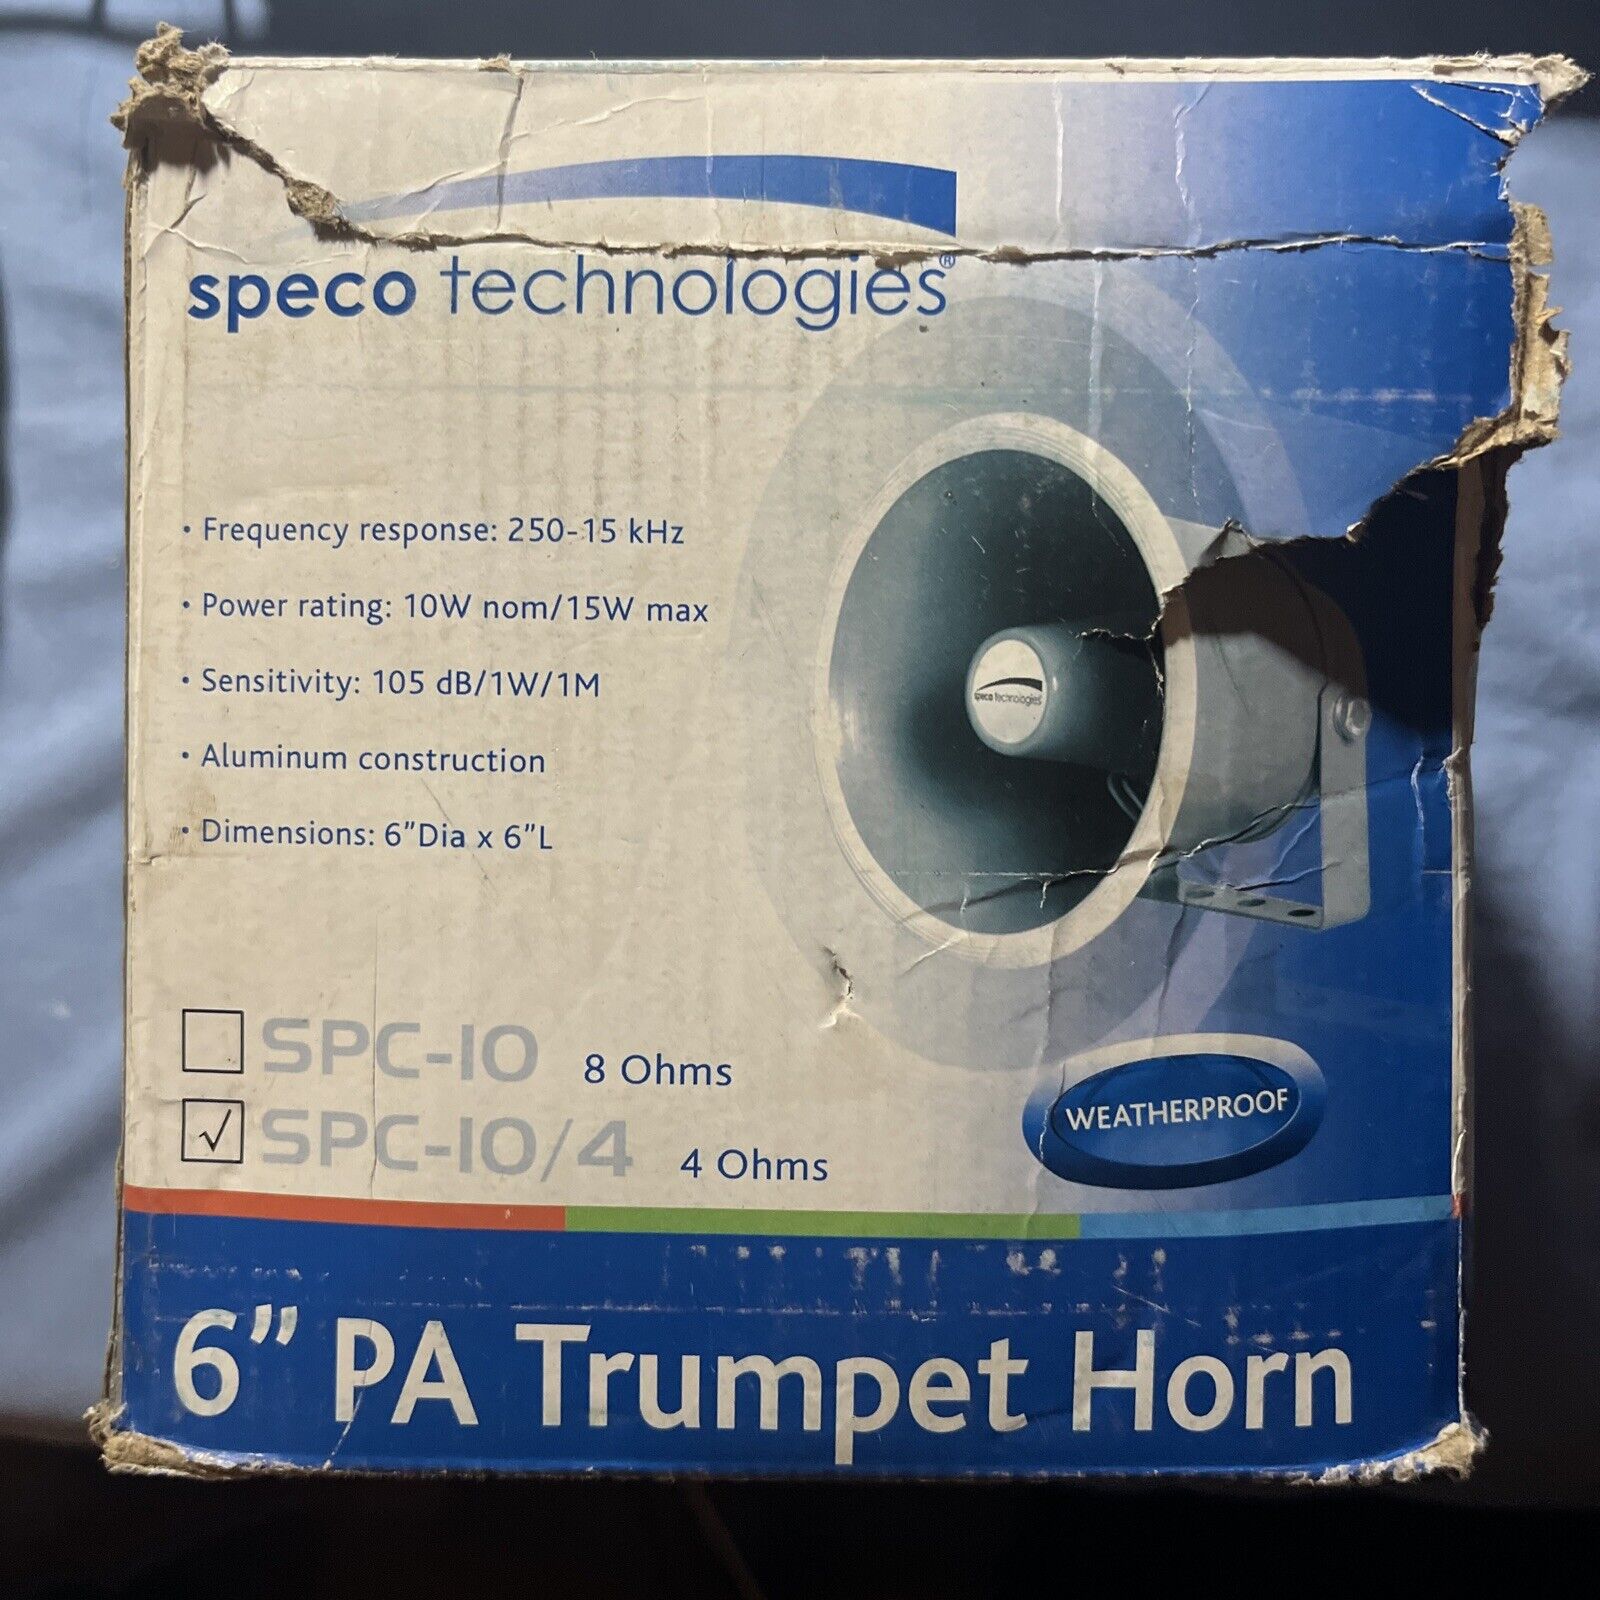 Speco Technologies SPC-10/4 Trumpet Horn